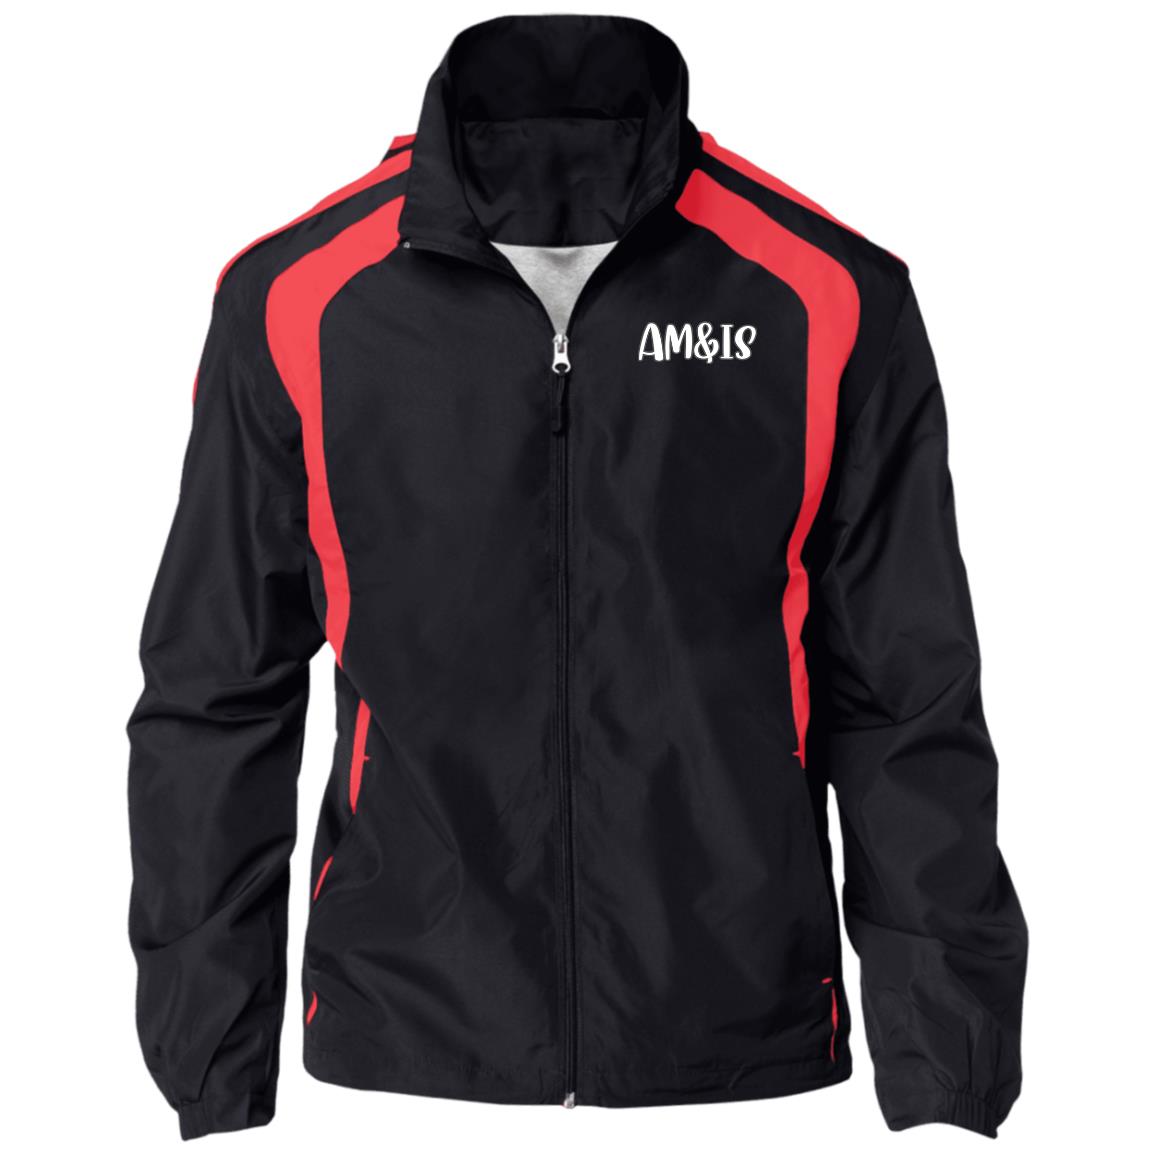 BLACK/TRUE RED - AM&IS Activewear Jersey-Lined Raglan Jacket - mens jacket at TFC&H Co.